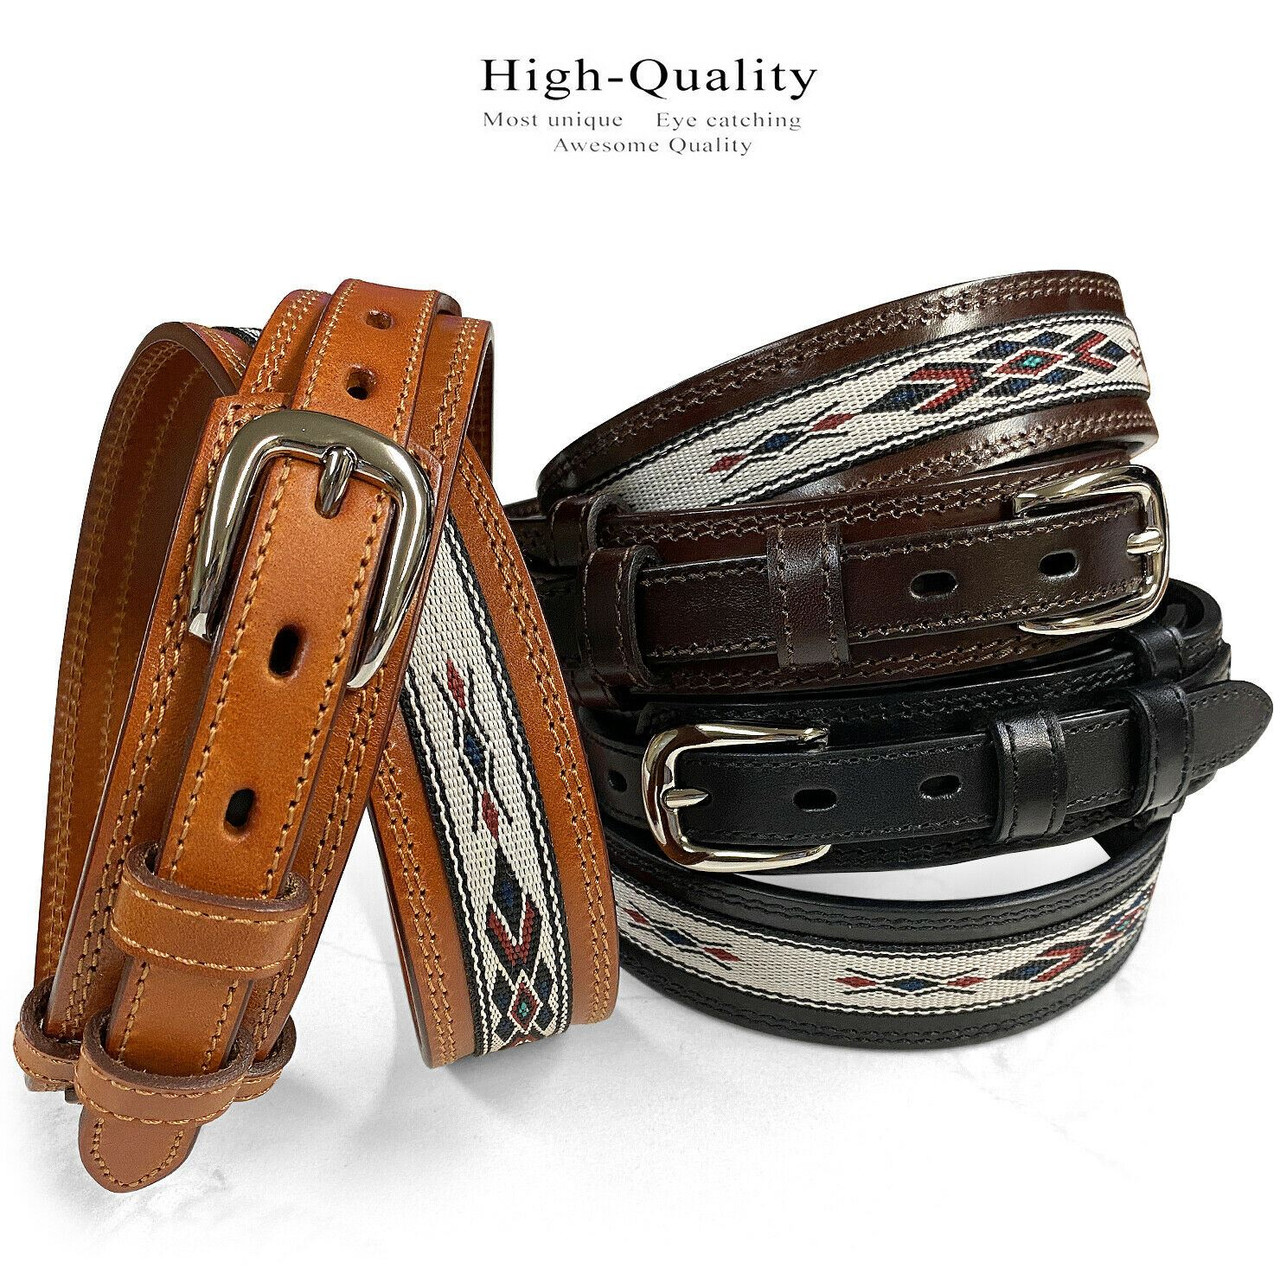 3D craft diamond pattern belt leather casual men's belt